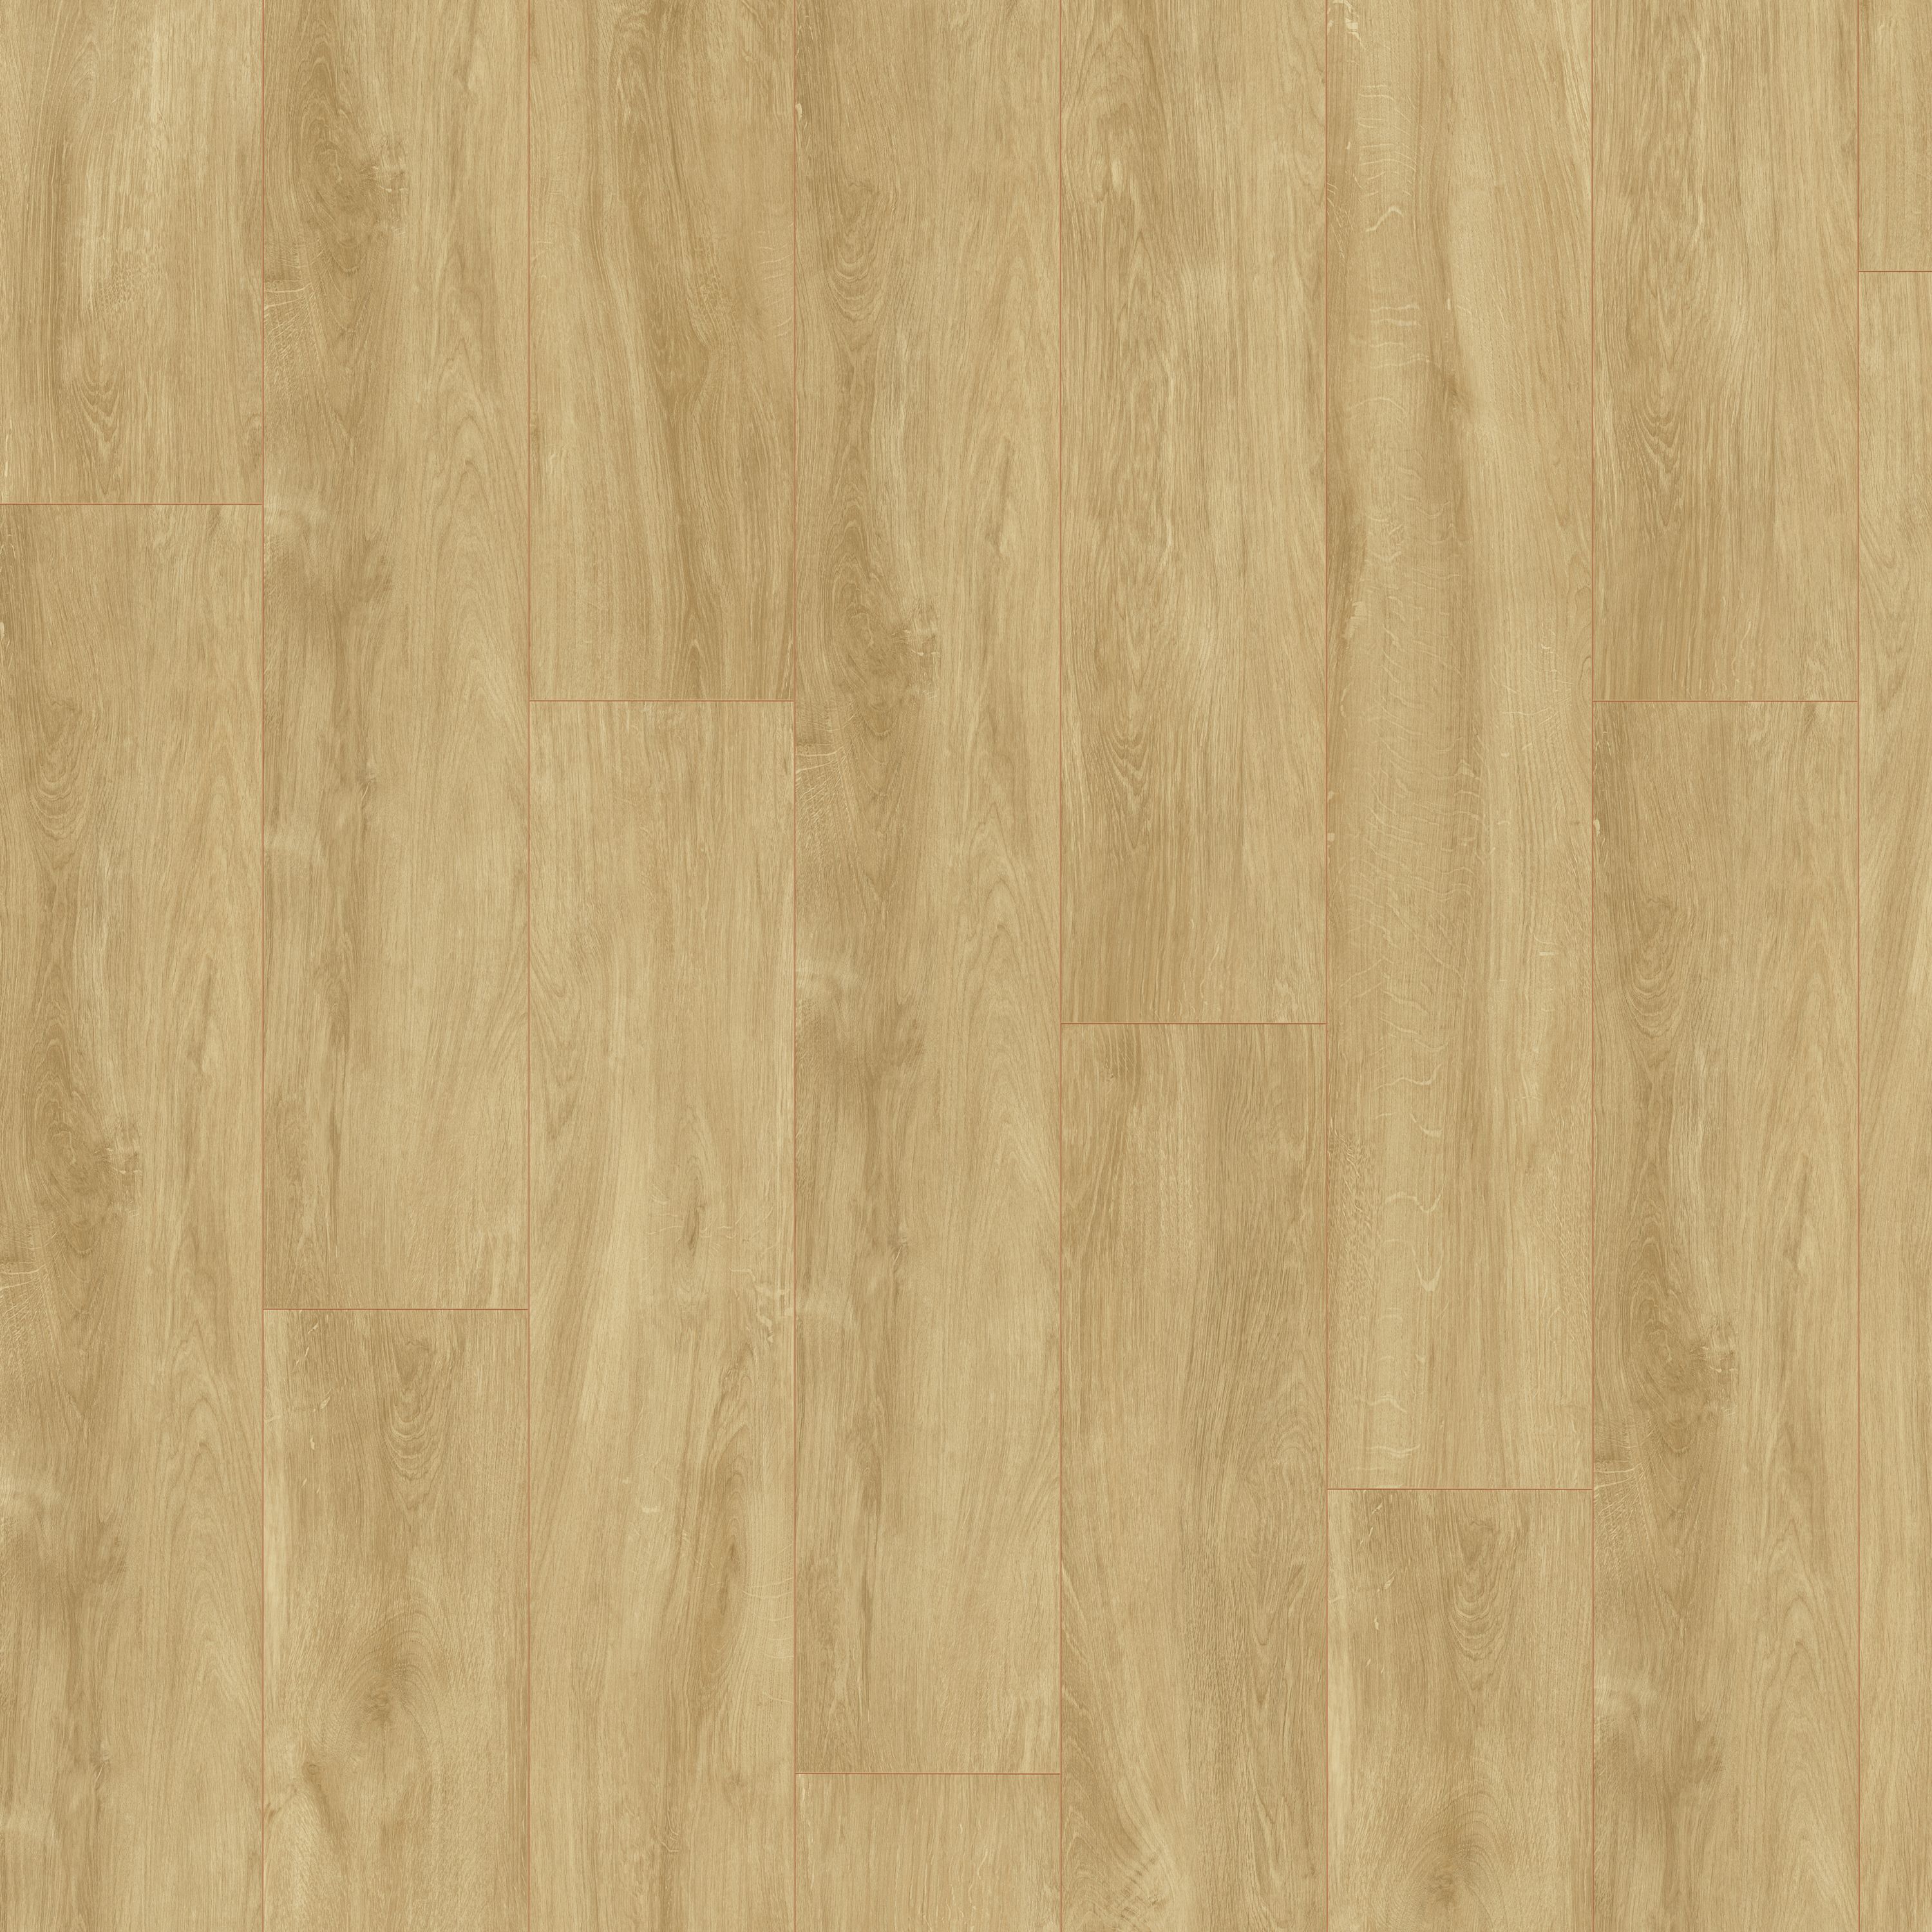 GoodHome Lulea Pure Natural Wood effect Laminate Flooring, 1.995m²